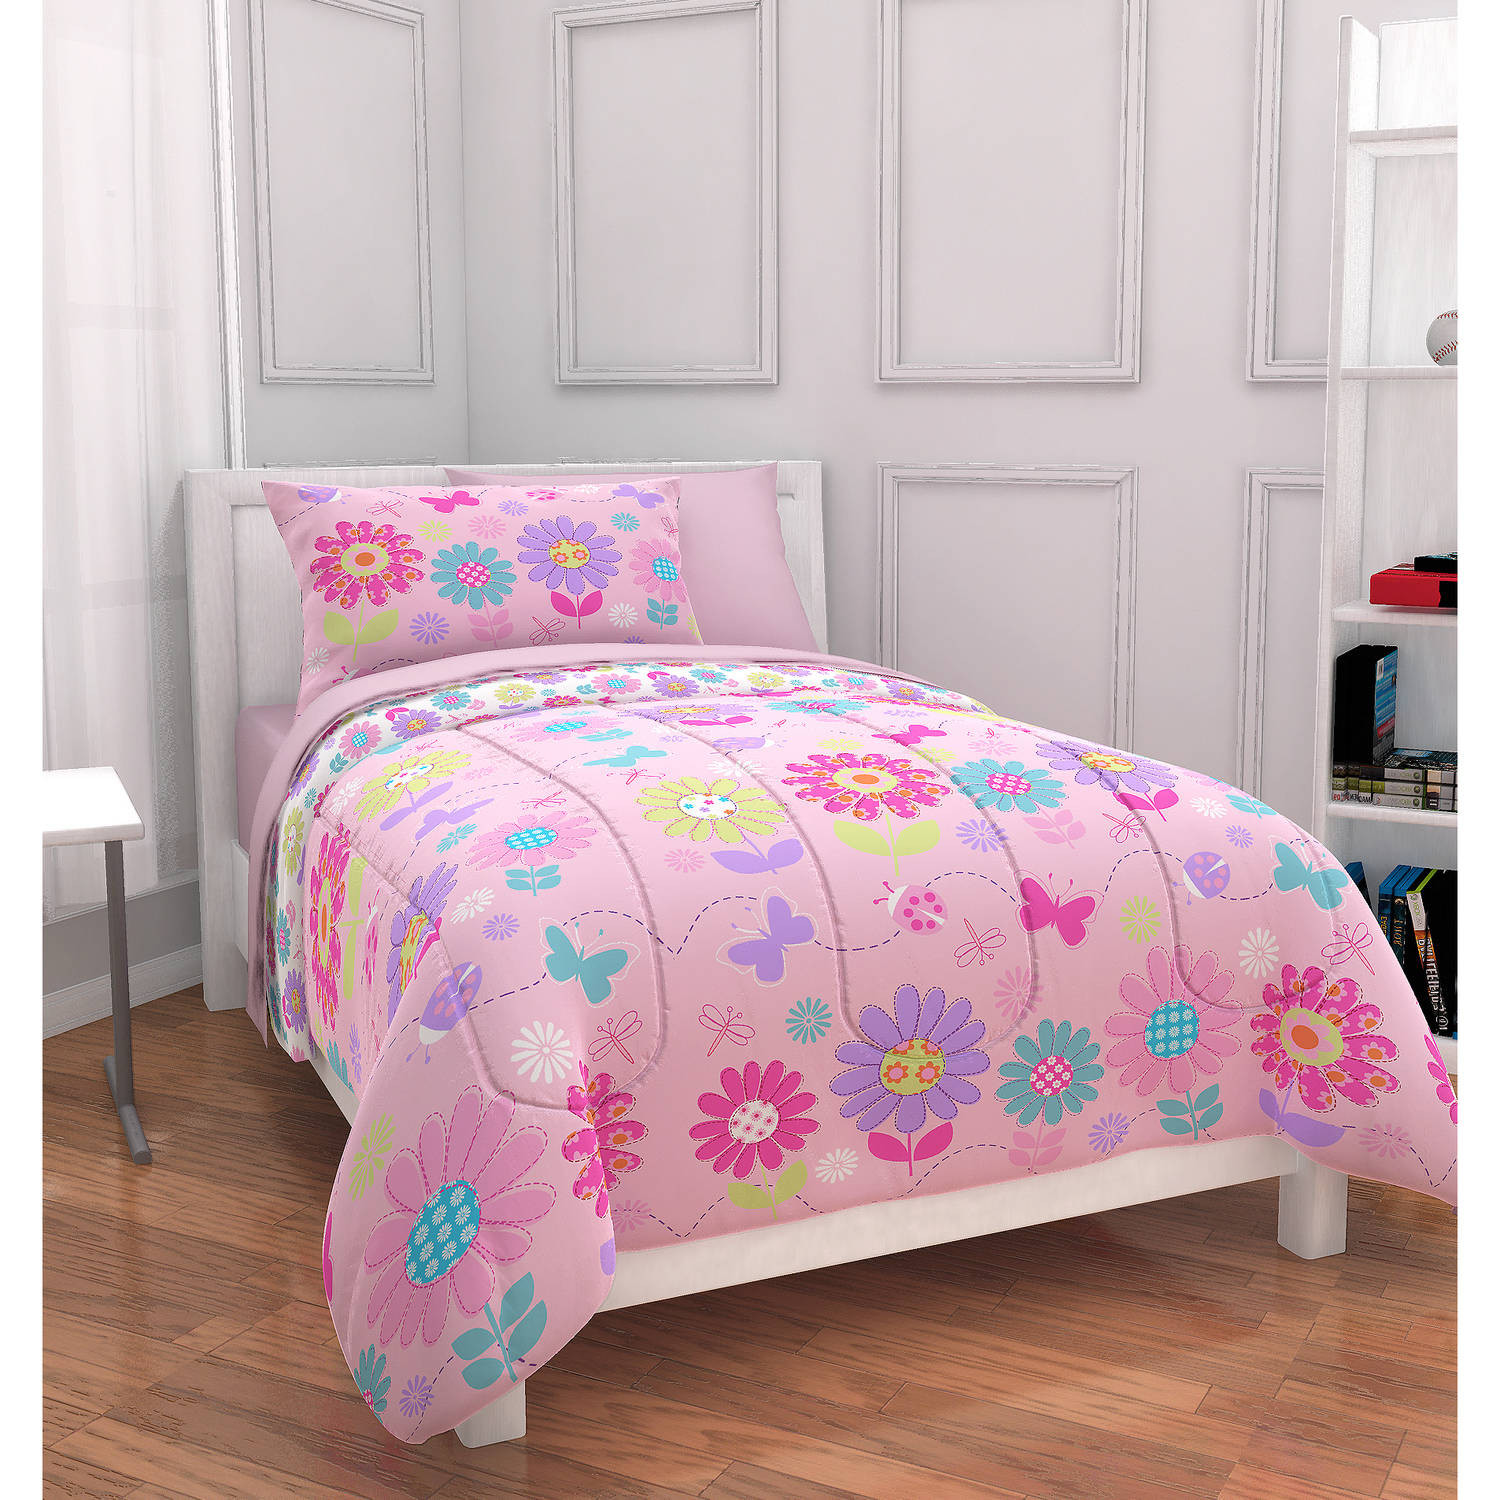 Walmart Bedroom Sets For Kids
 Heritage Club Daisy Floral Bed in a Bag Bedding Set